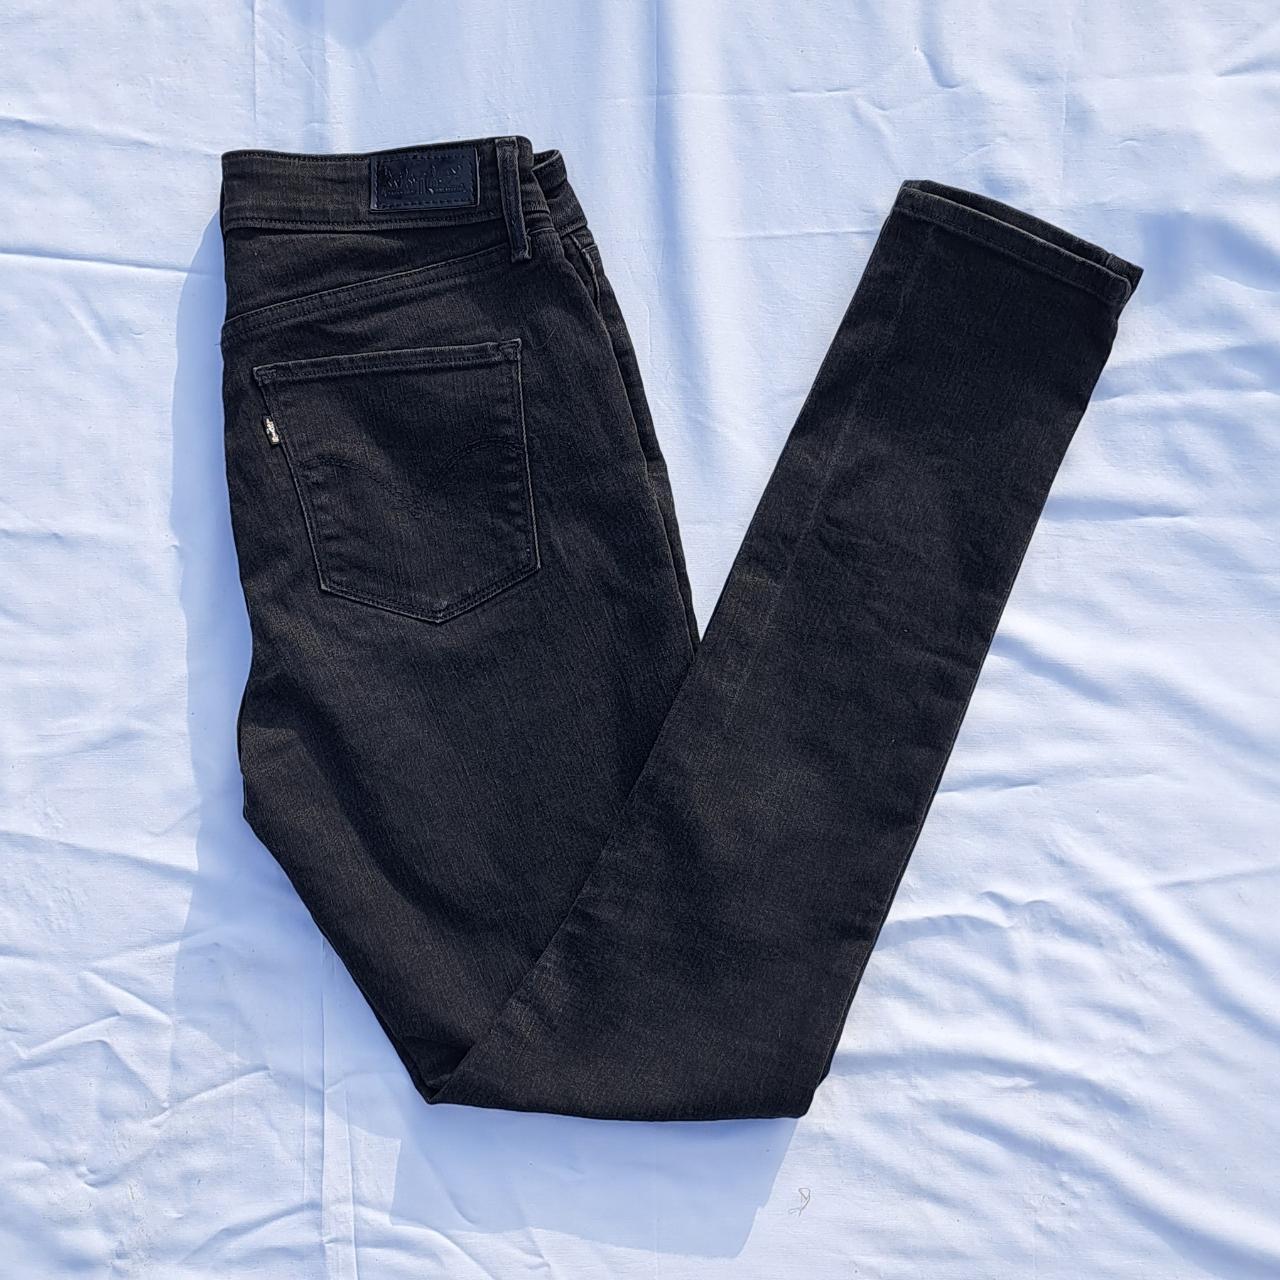 Levi's 721 High Rise Skinny Jeans in black. 28